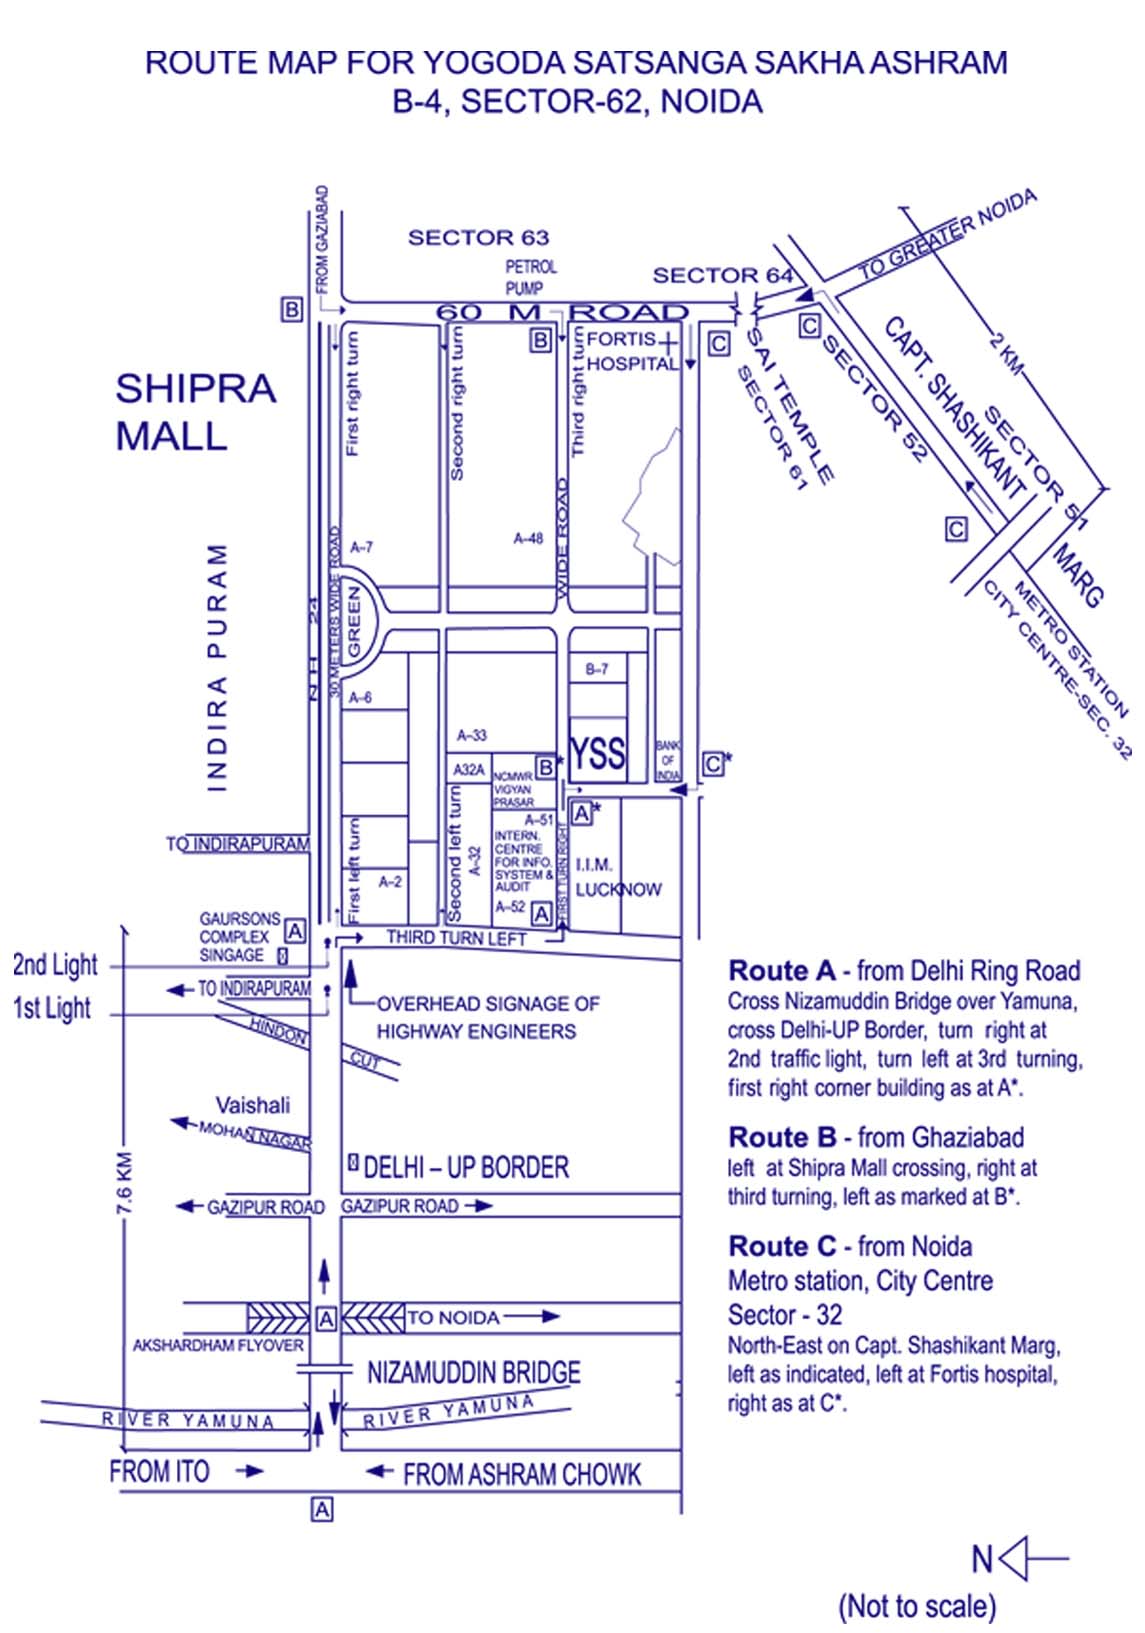 Route map for Yogoda Satsanga Sakha ashram Noida